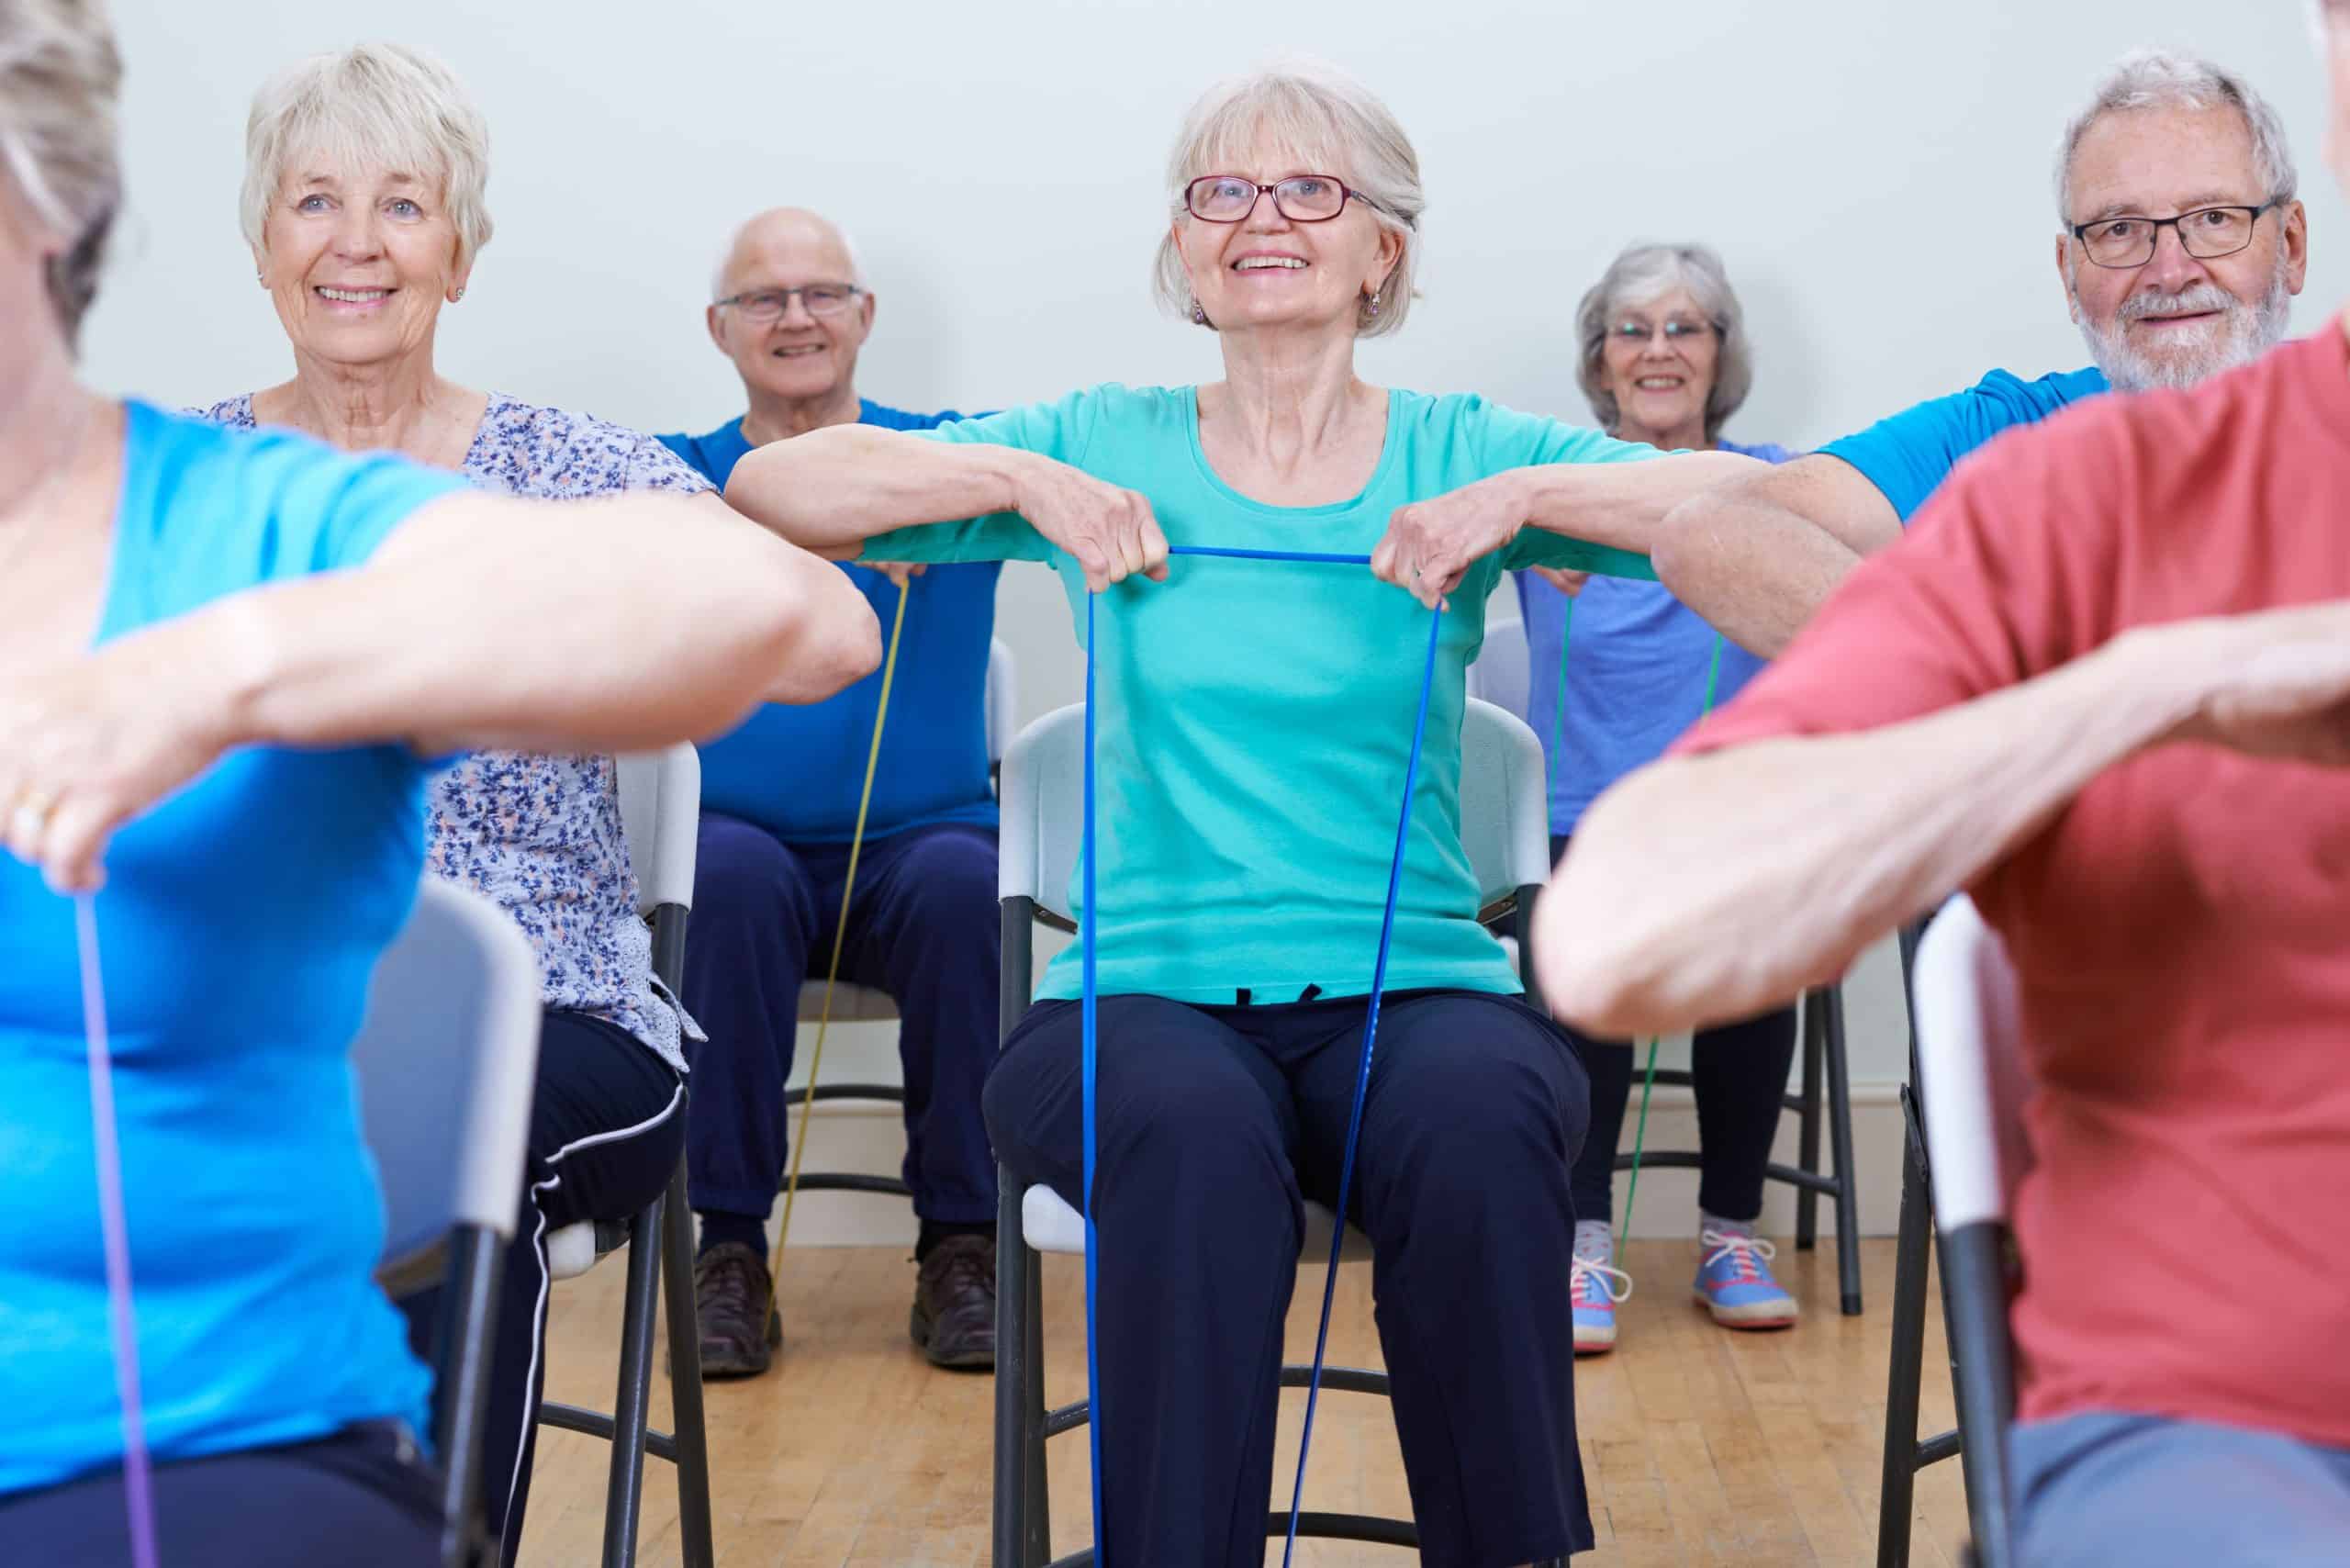 Chair aerobic exercises for senior citizens